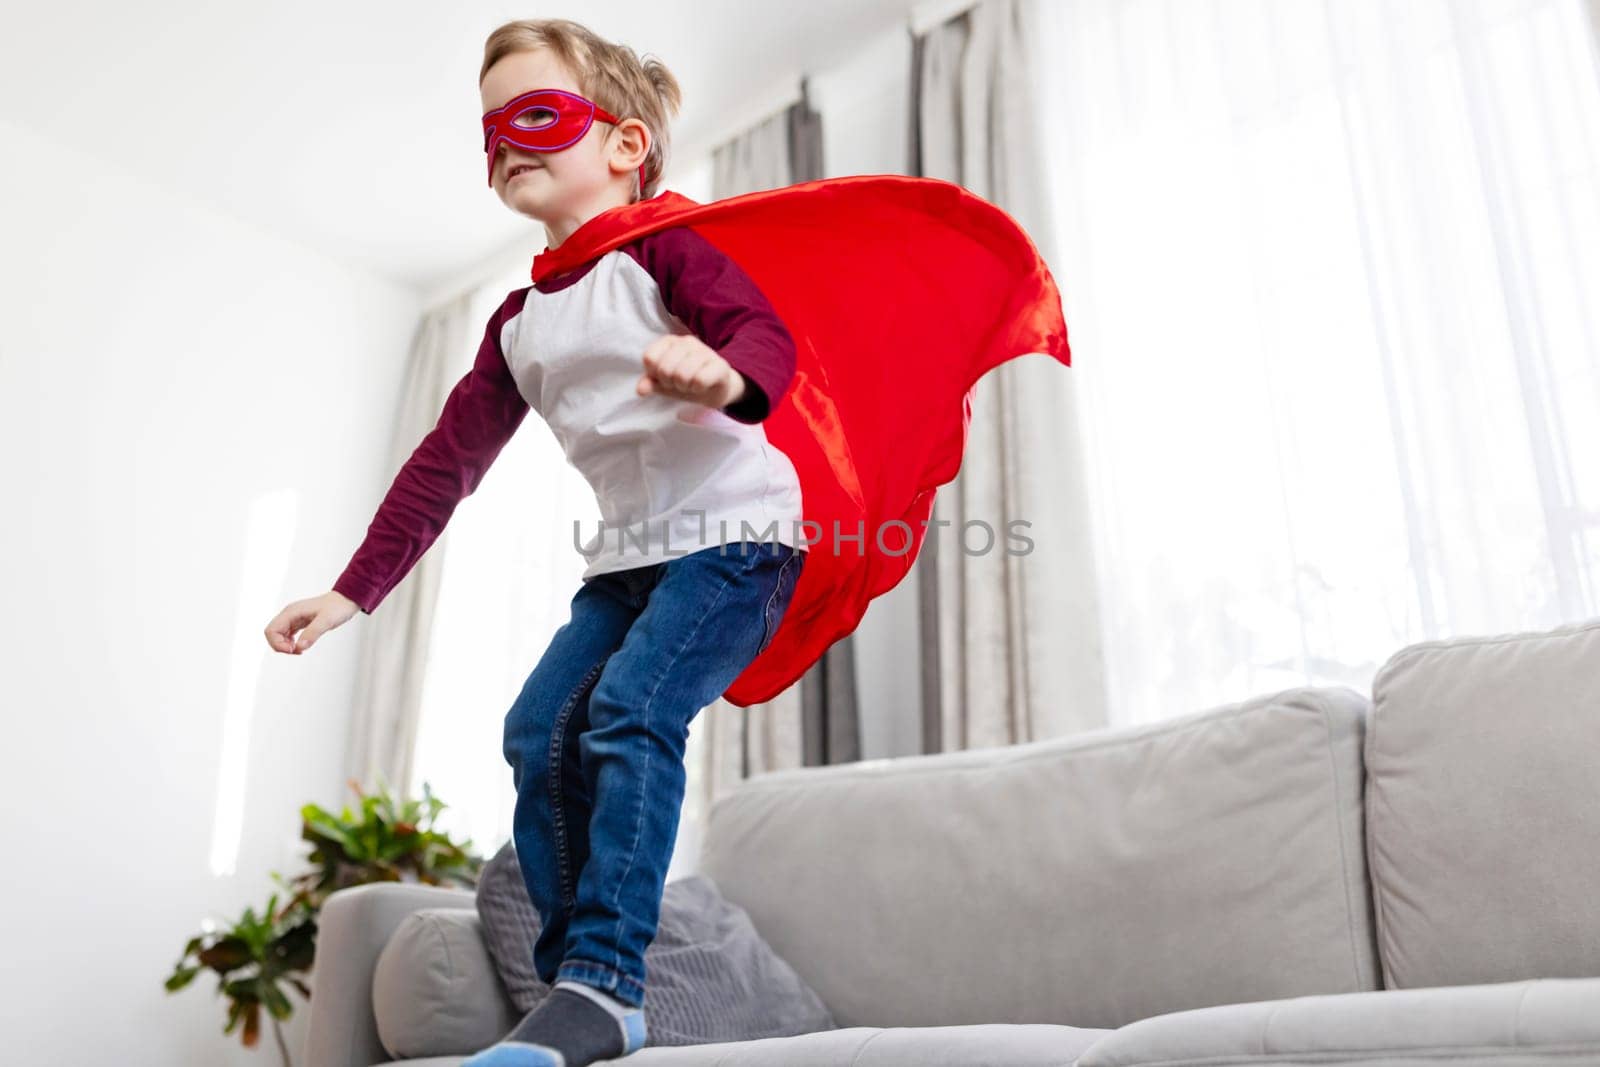 Child in superhero costume playfully 'flies' inside home